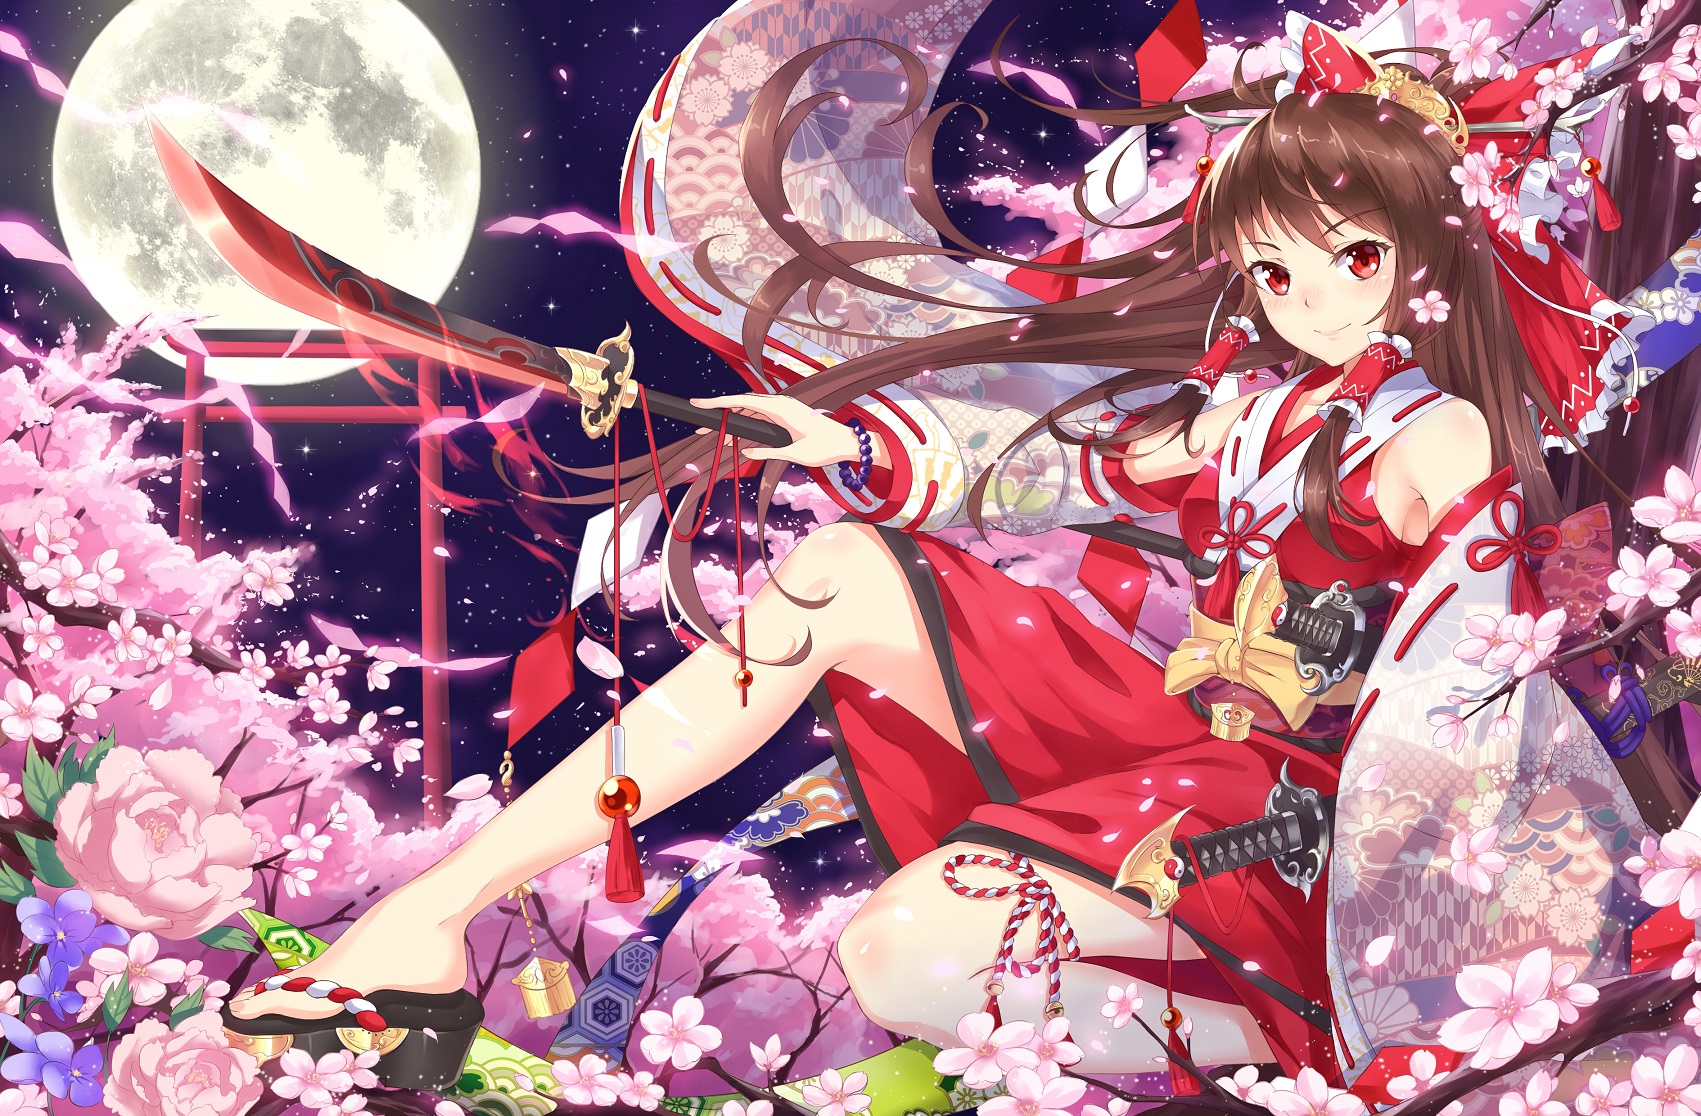 konachan-com-185781-brown_hair-cherry_blossoms-hakurei_reimu-jpeg_artifacts-katana-long_hair-miko-moon-night-pc9527-petals-red_eyes-spear-stars-sword-torii-touhou-weapon.jpg